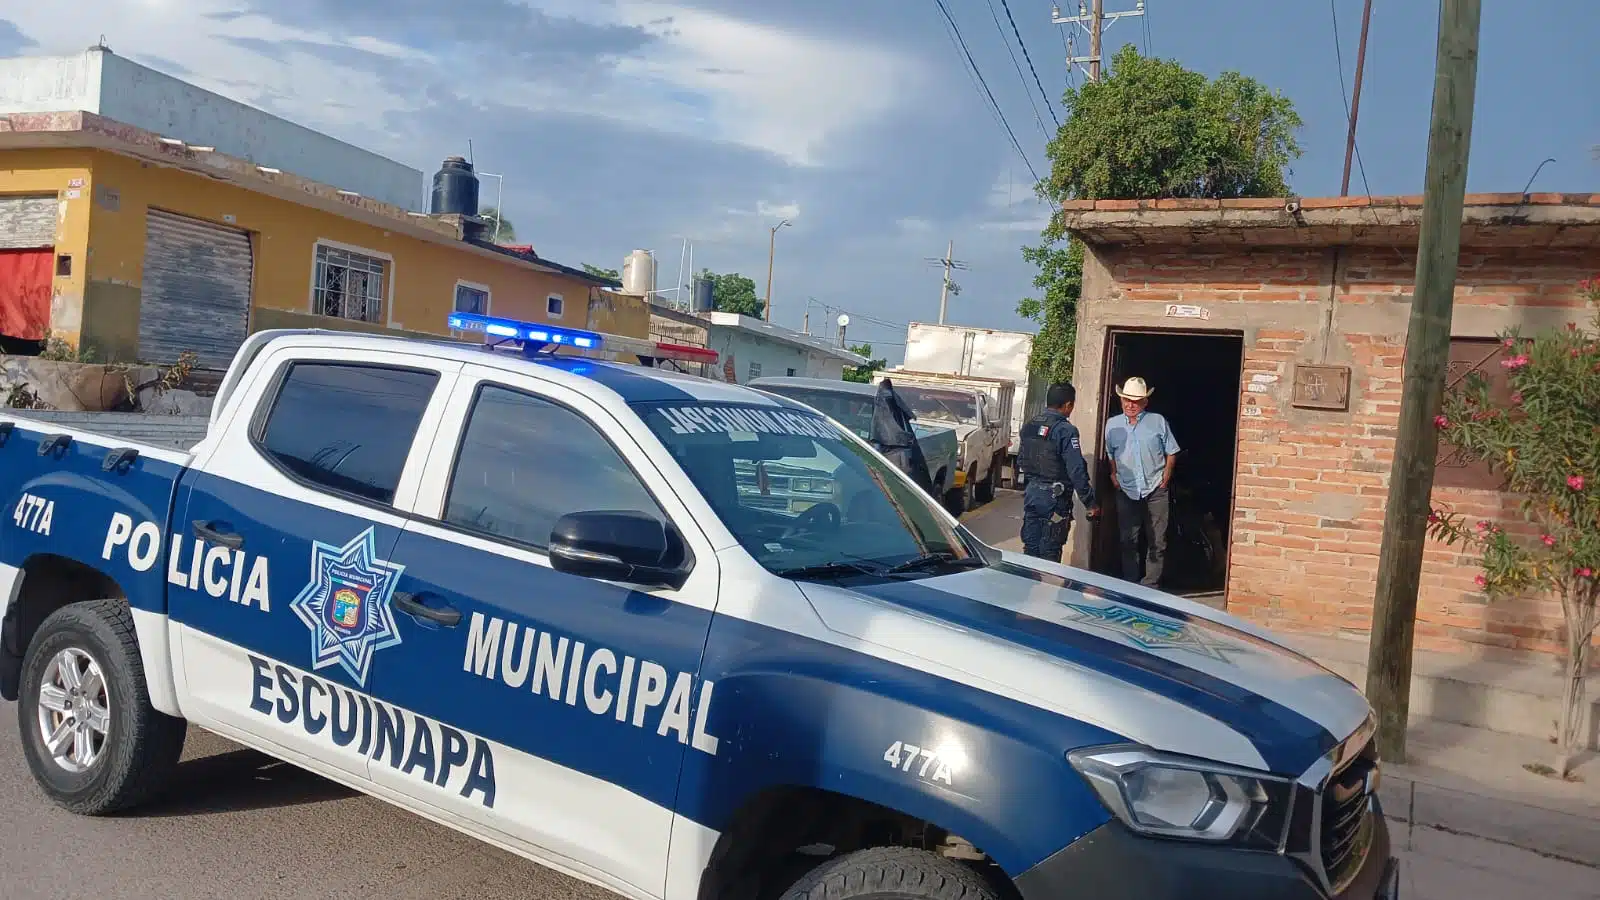 Policía Municipal de Escuinapa